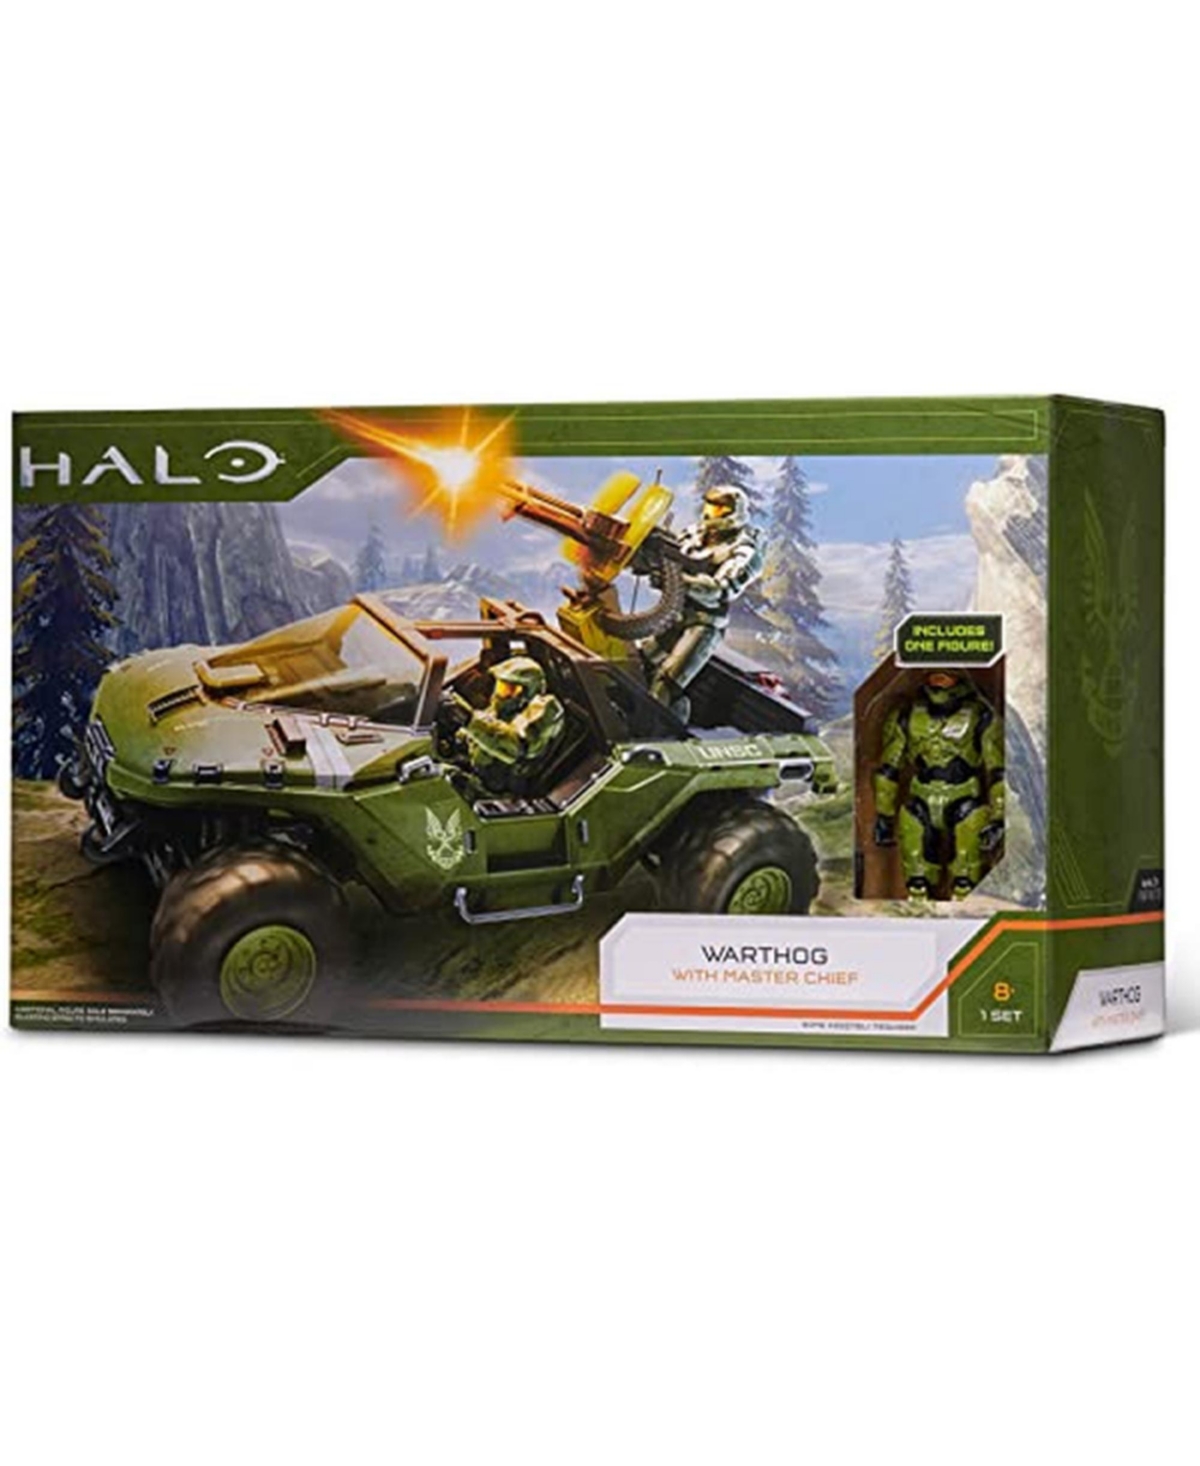 Halo Deluxe Vehicle 4" Figure Vehicle Assortment Set In Gray